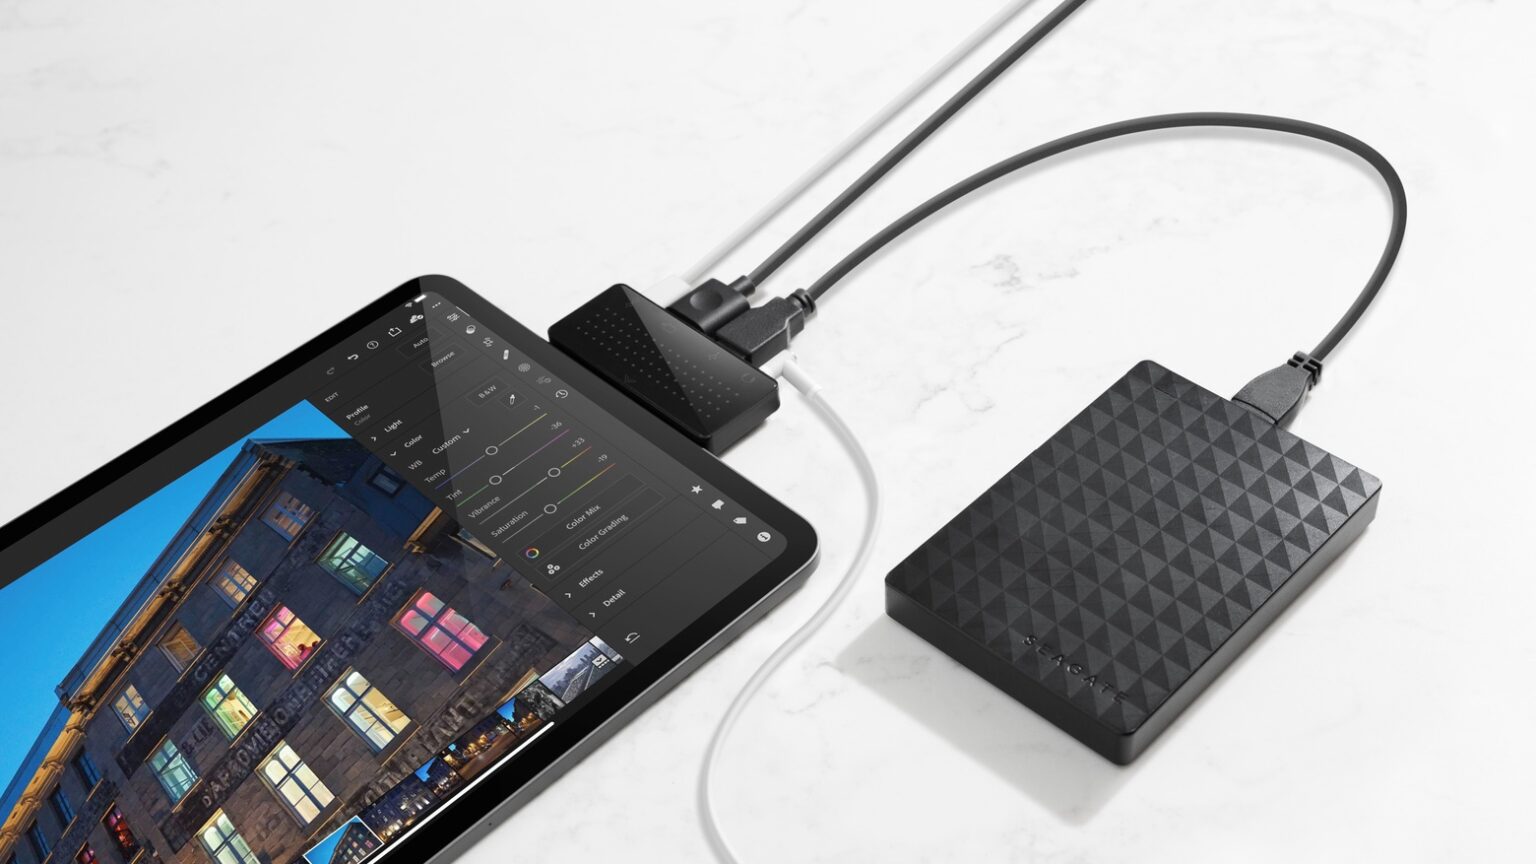 Super-small StayGo mini adds USB, HDMI, headphone ports to iPad